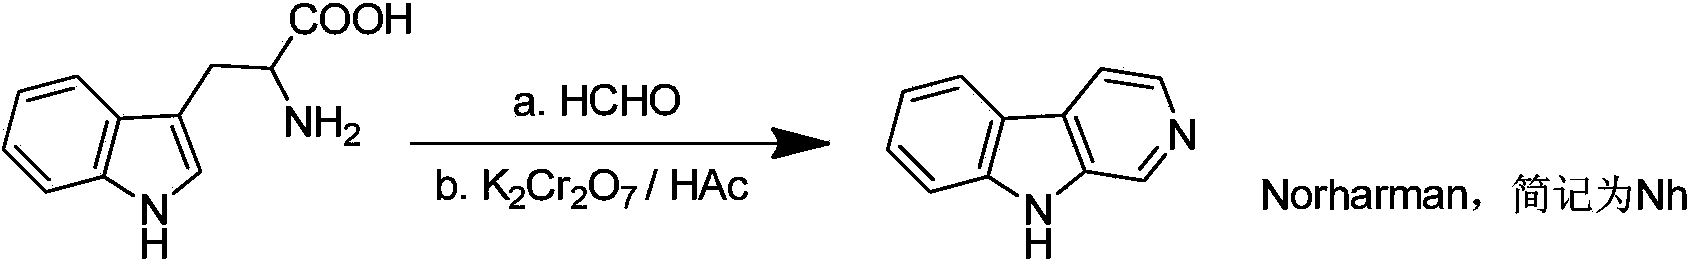 Norharman-ruthenium (II) polypyridine complex with antitumour activity